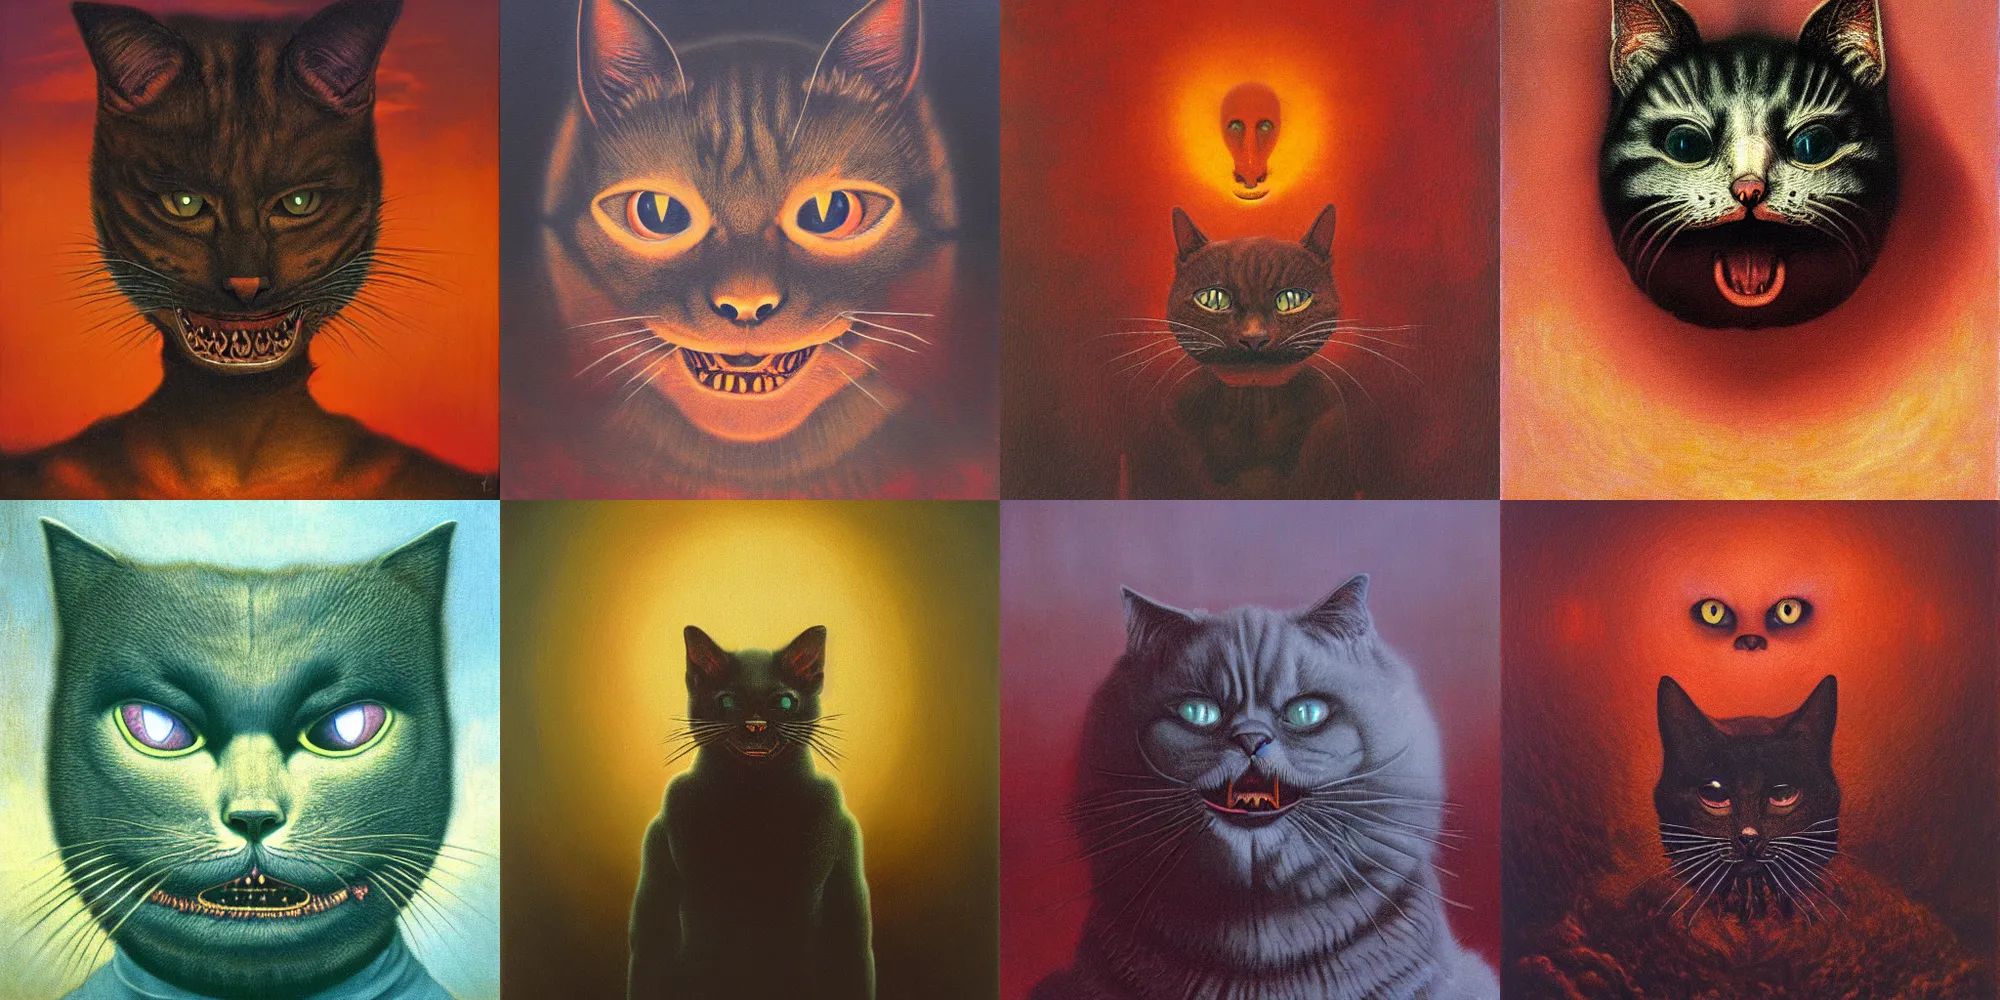 Image similar to grinning evil cat, HD, in style of beksinski, film grain, medium format, 8k resolution, oil on canvas